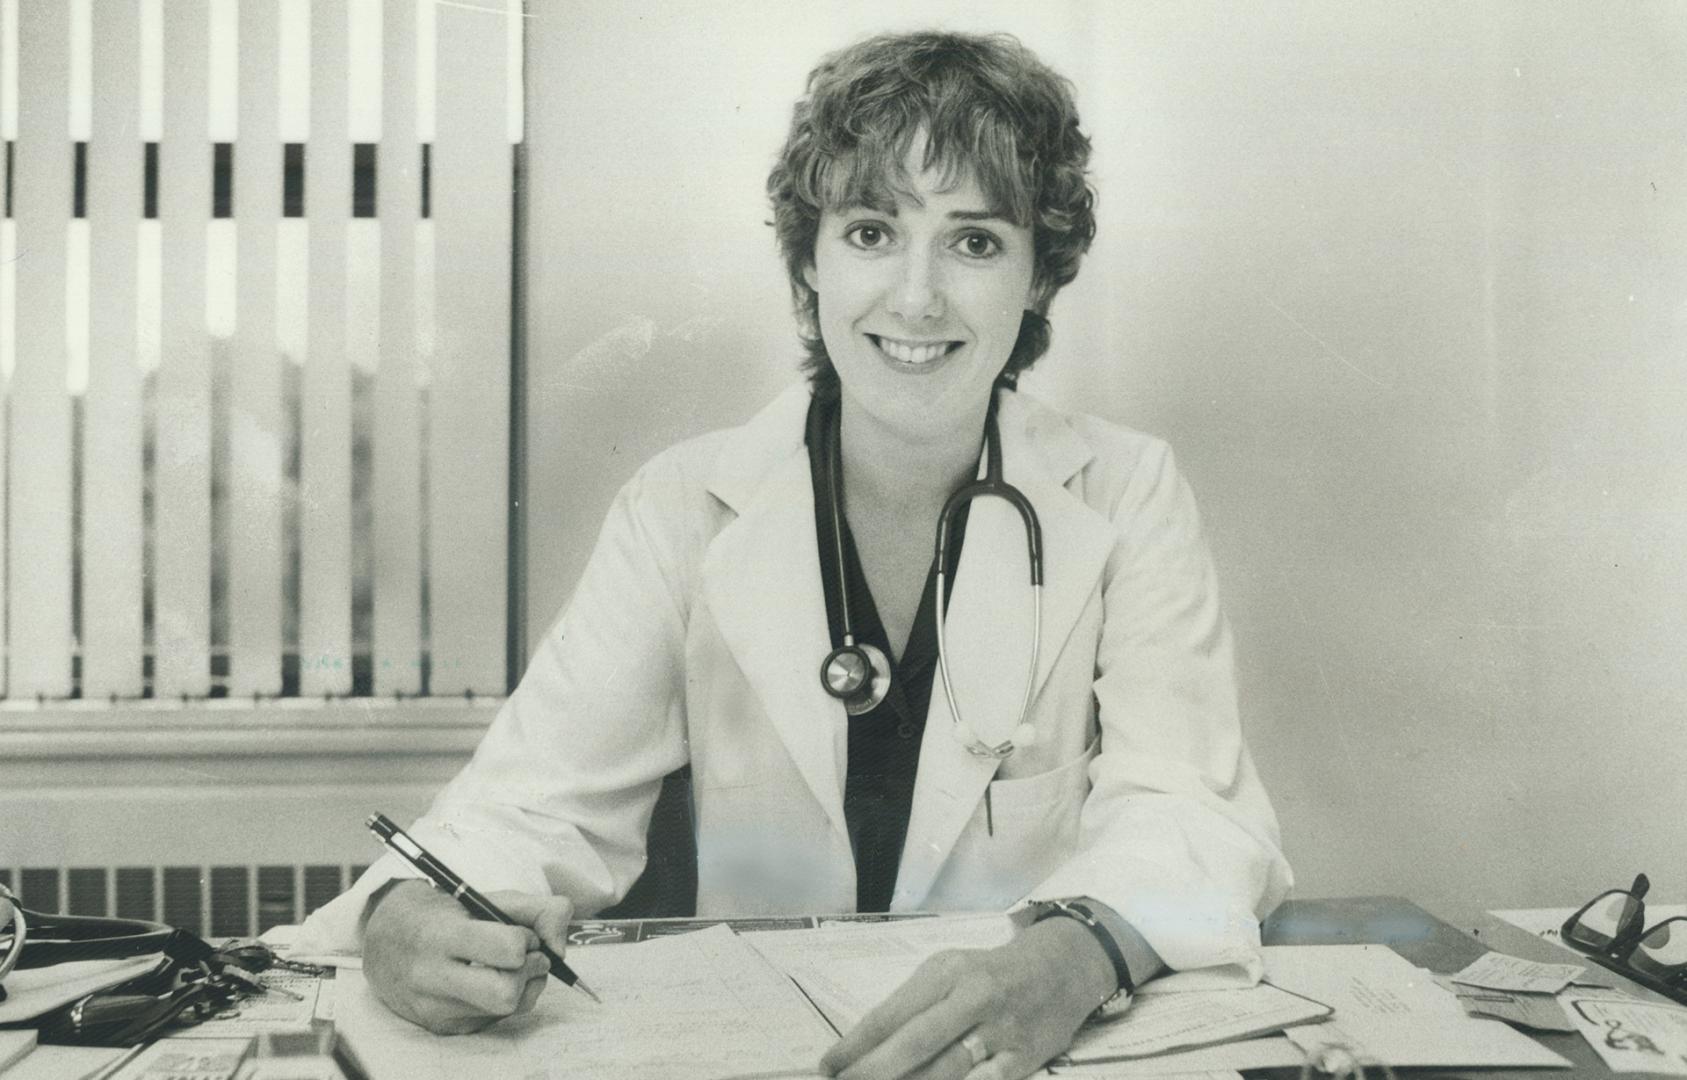 Dr. Kathleen Wilcox